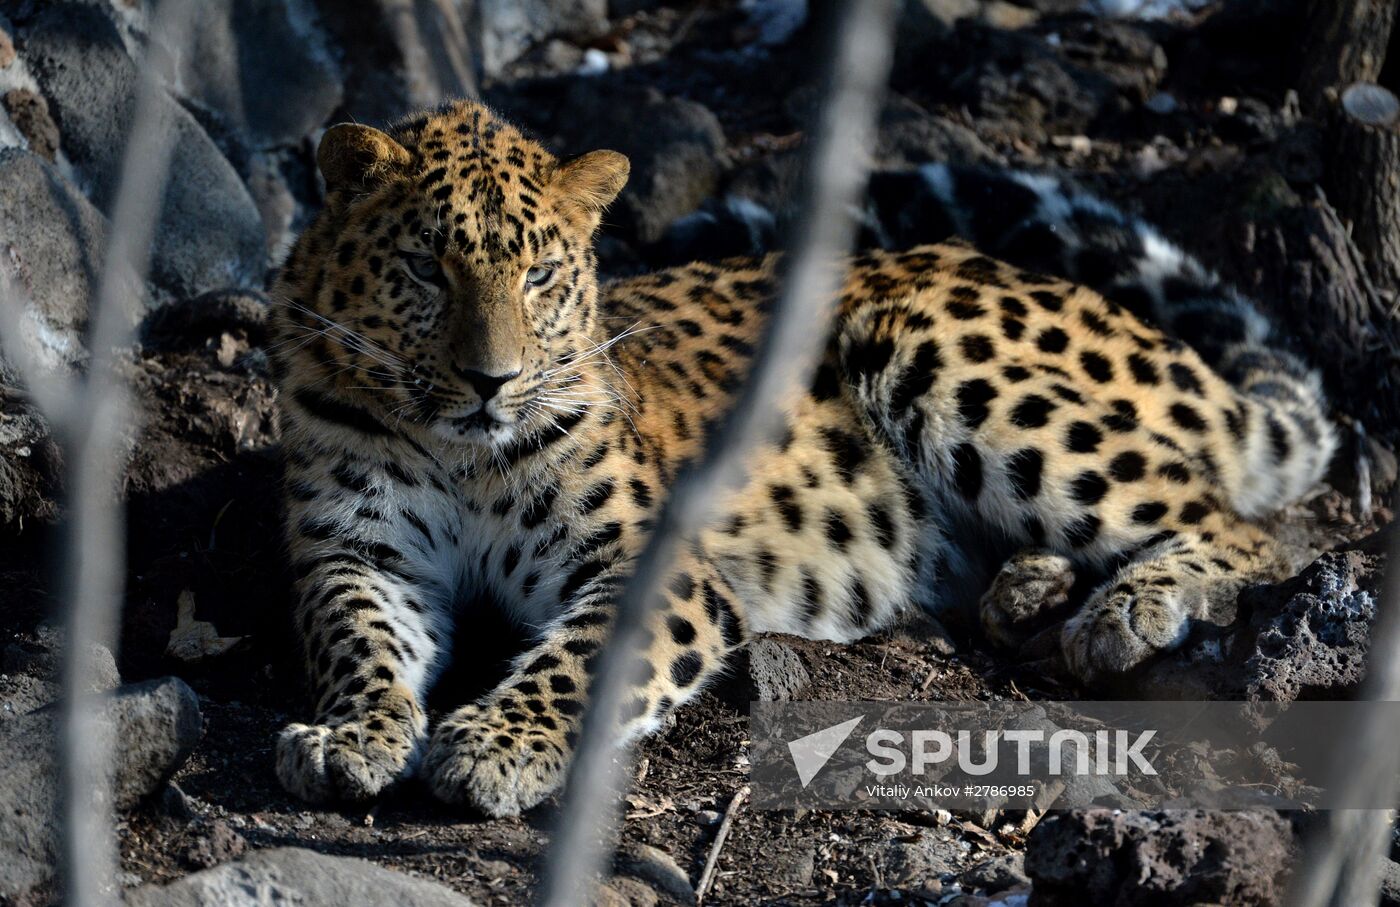 Primorye's Safari Park turns 9